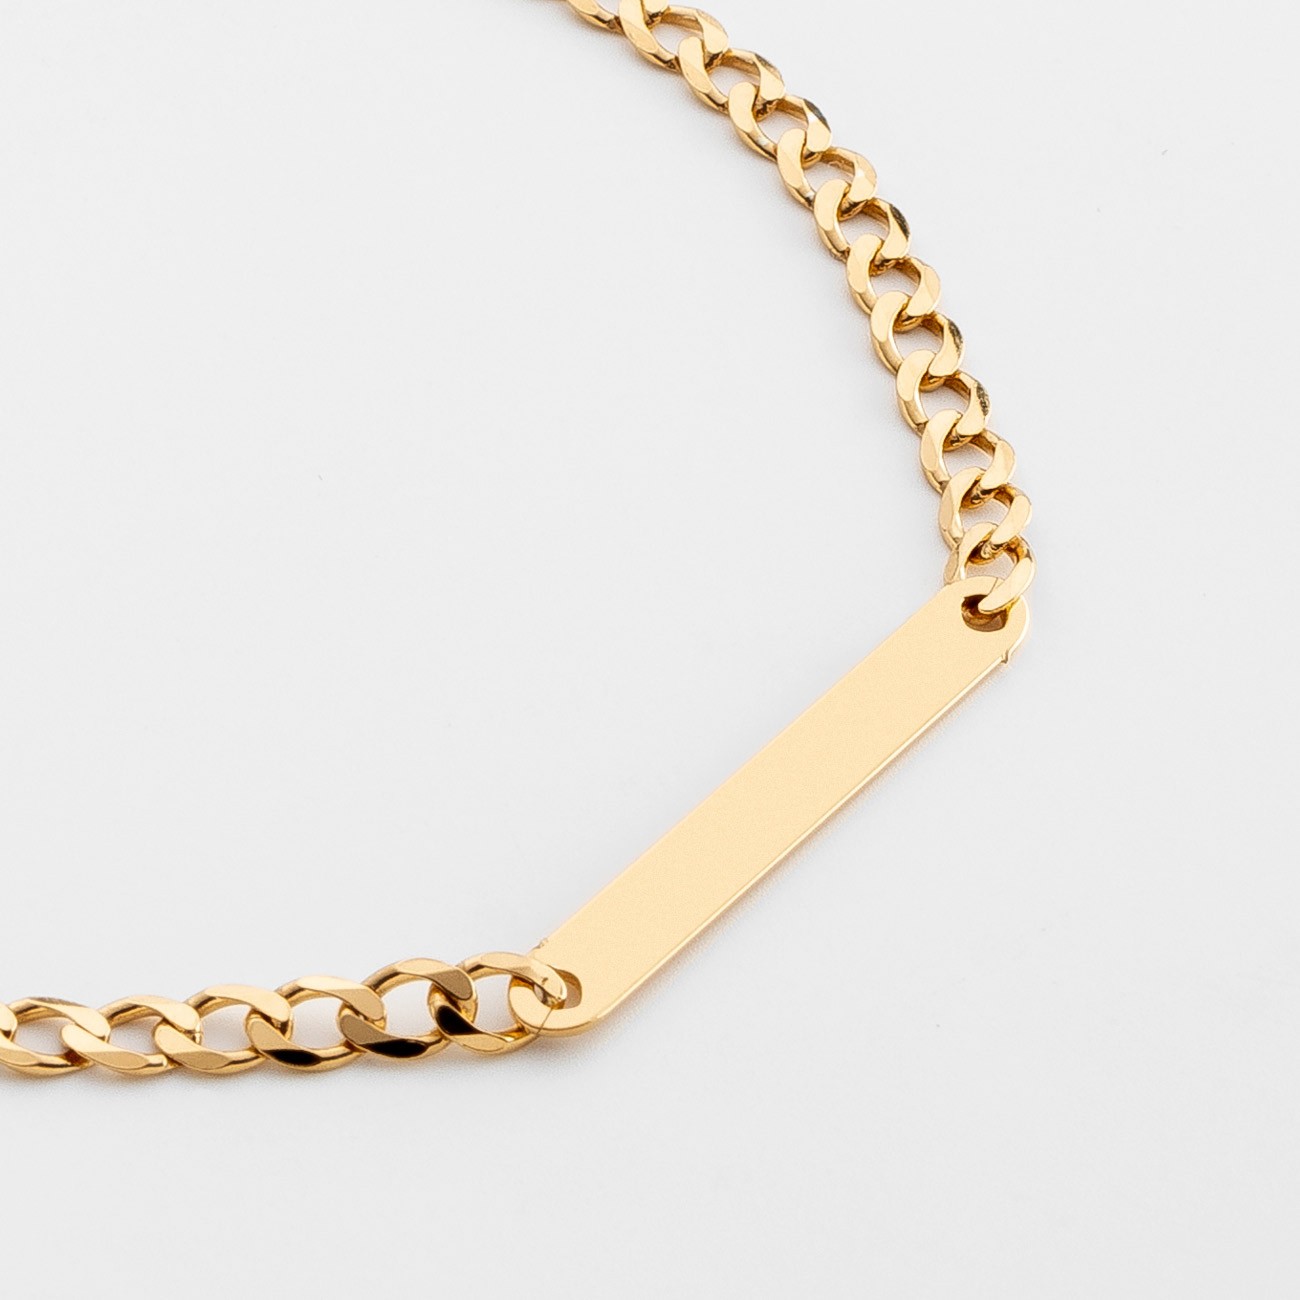 Men's bracelet rectangular tag curb chain 925